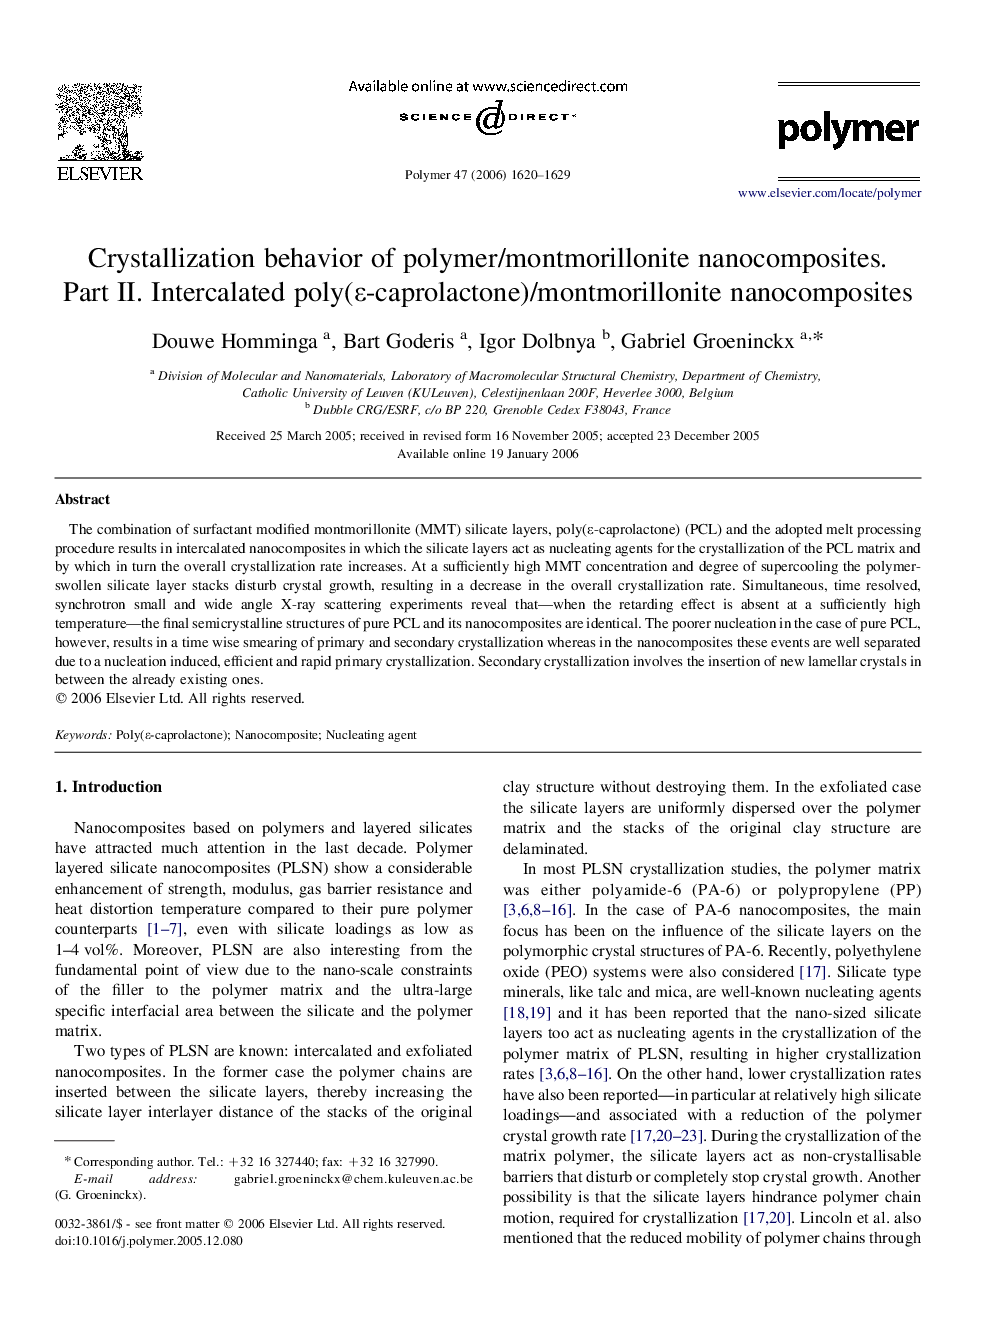 Crystallization behavior of polymer/montmorillonite nanocomposites. Part II. Intercalated poly(Îµ-caprolactone)/montmorillonite nanocomposites